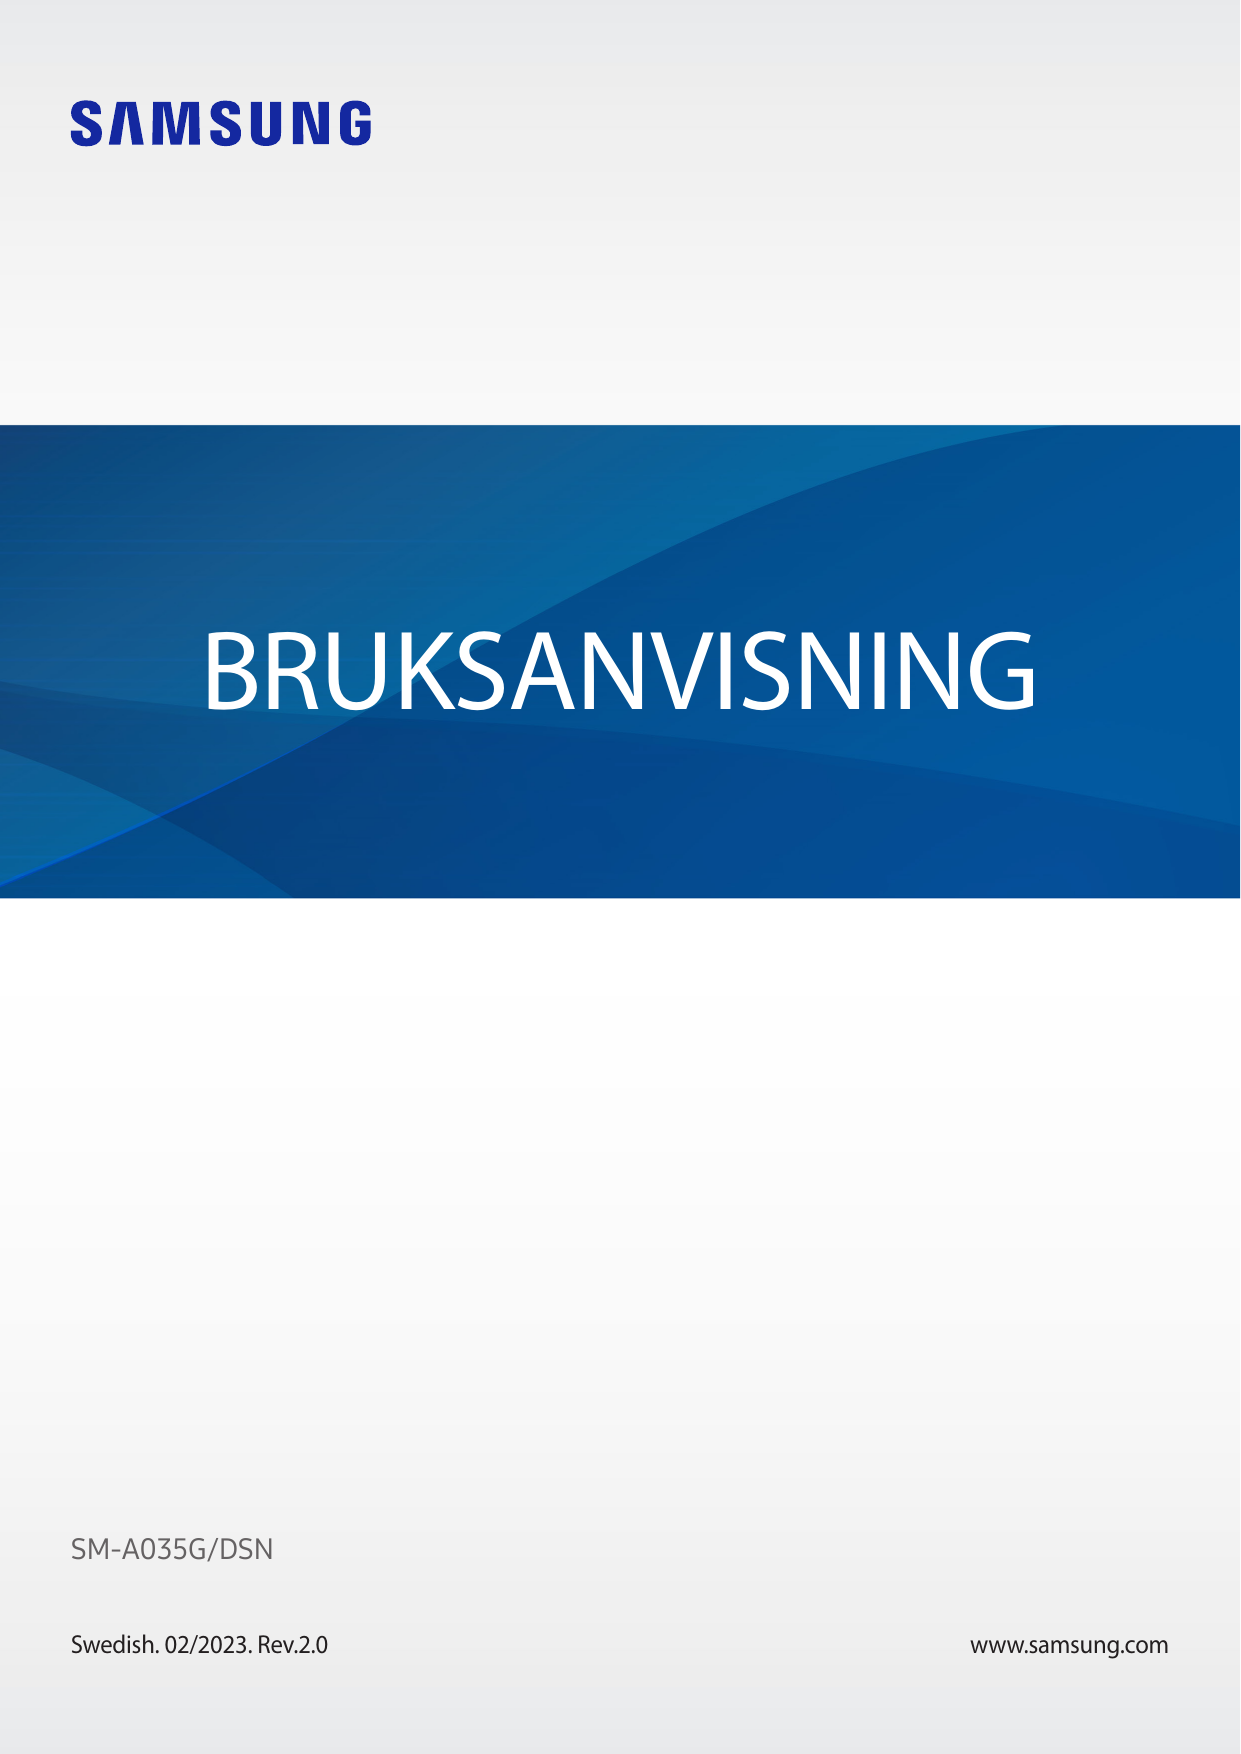 BRUKSANVISNINGSM-A035G/DSNSwedish. 02/2023. Rev.2.0www.samsung.com